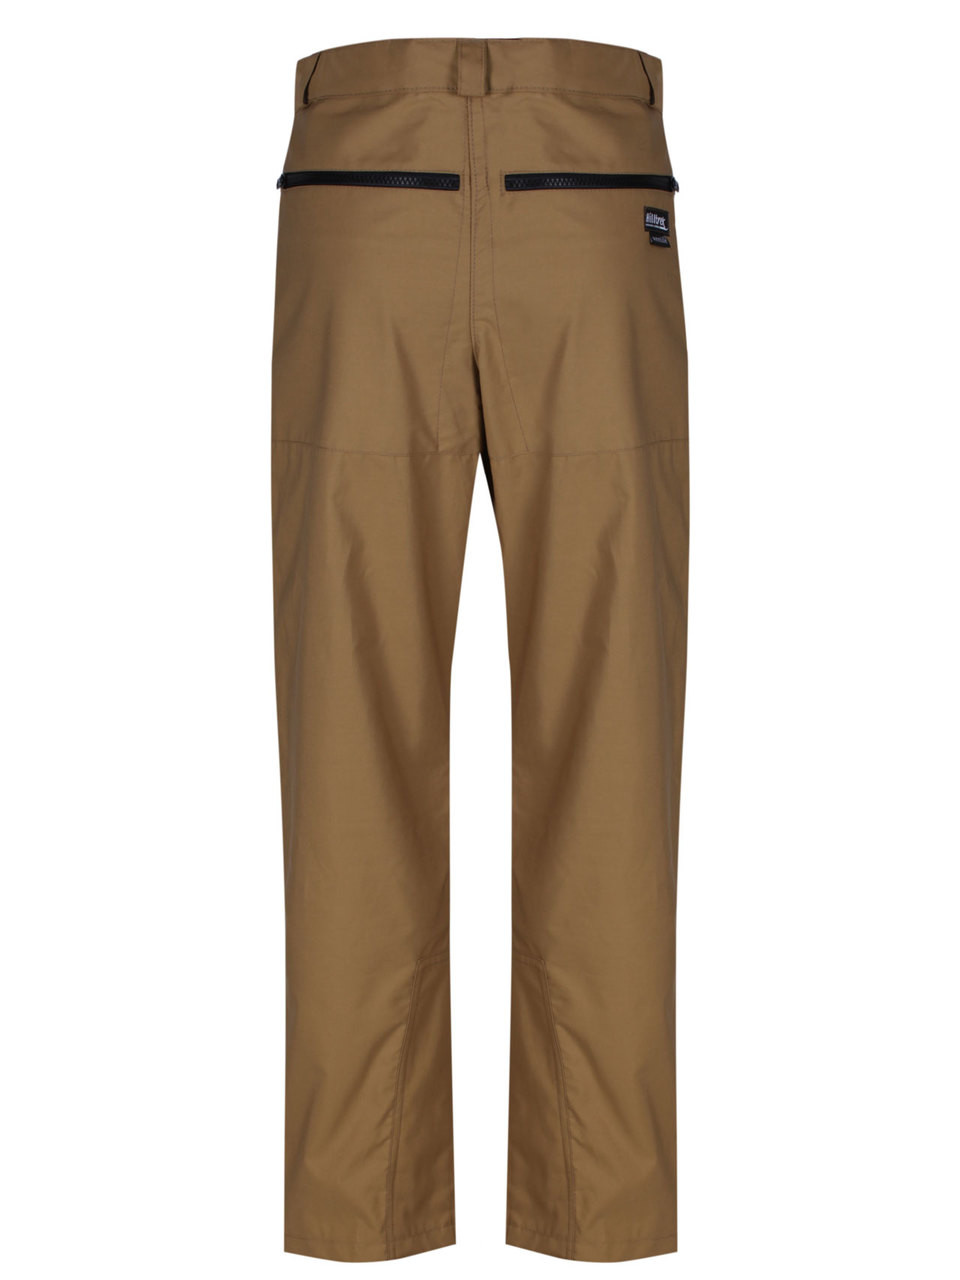 Blaven Trousers in Single Ventile® - tough, hardwearing and rustle free